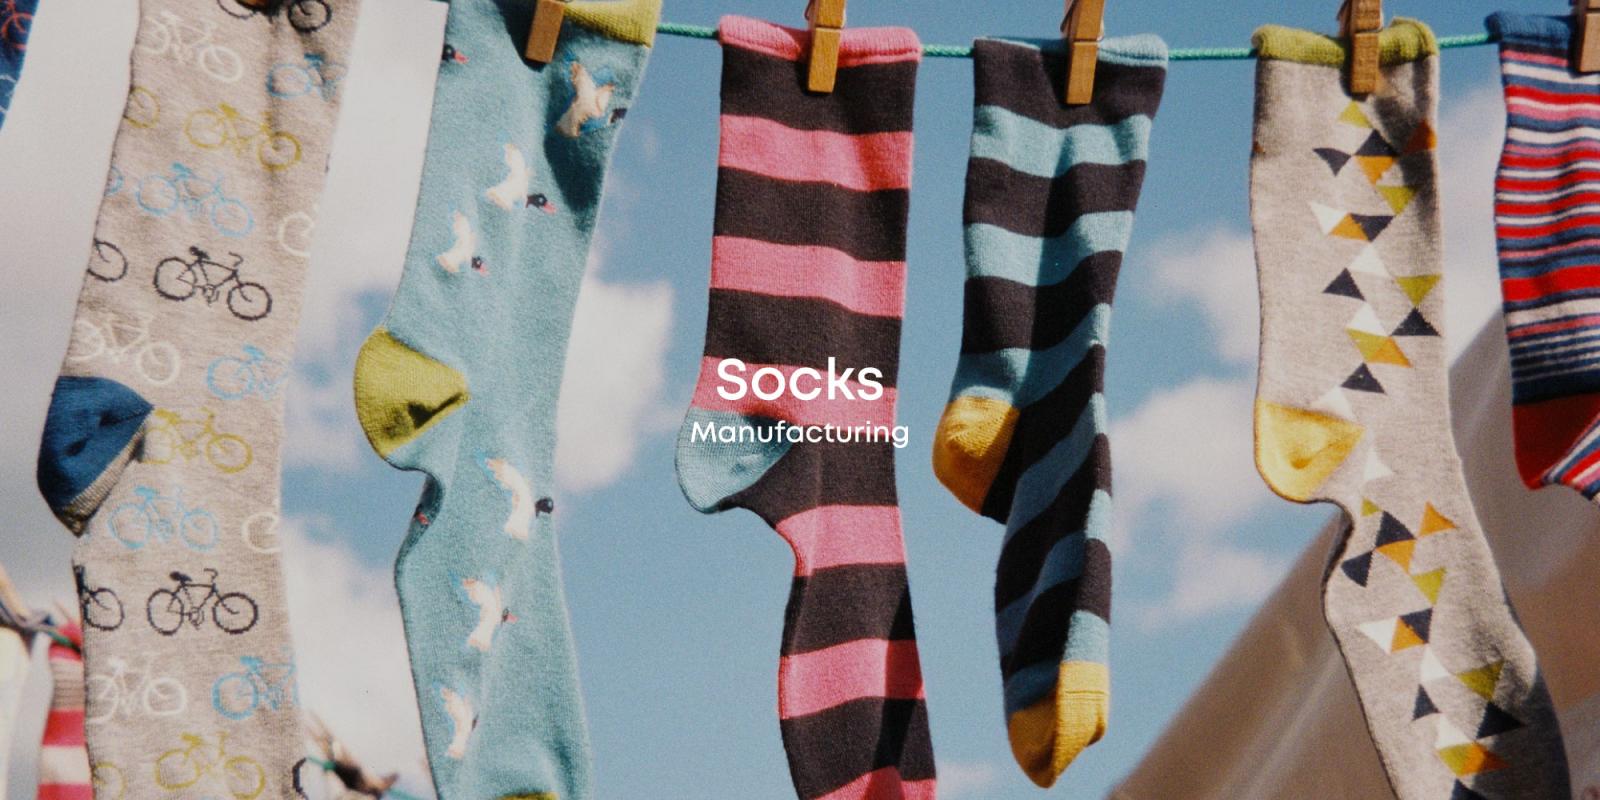 Socks Manufacturing